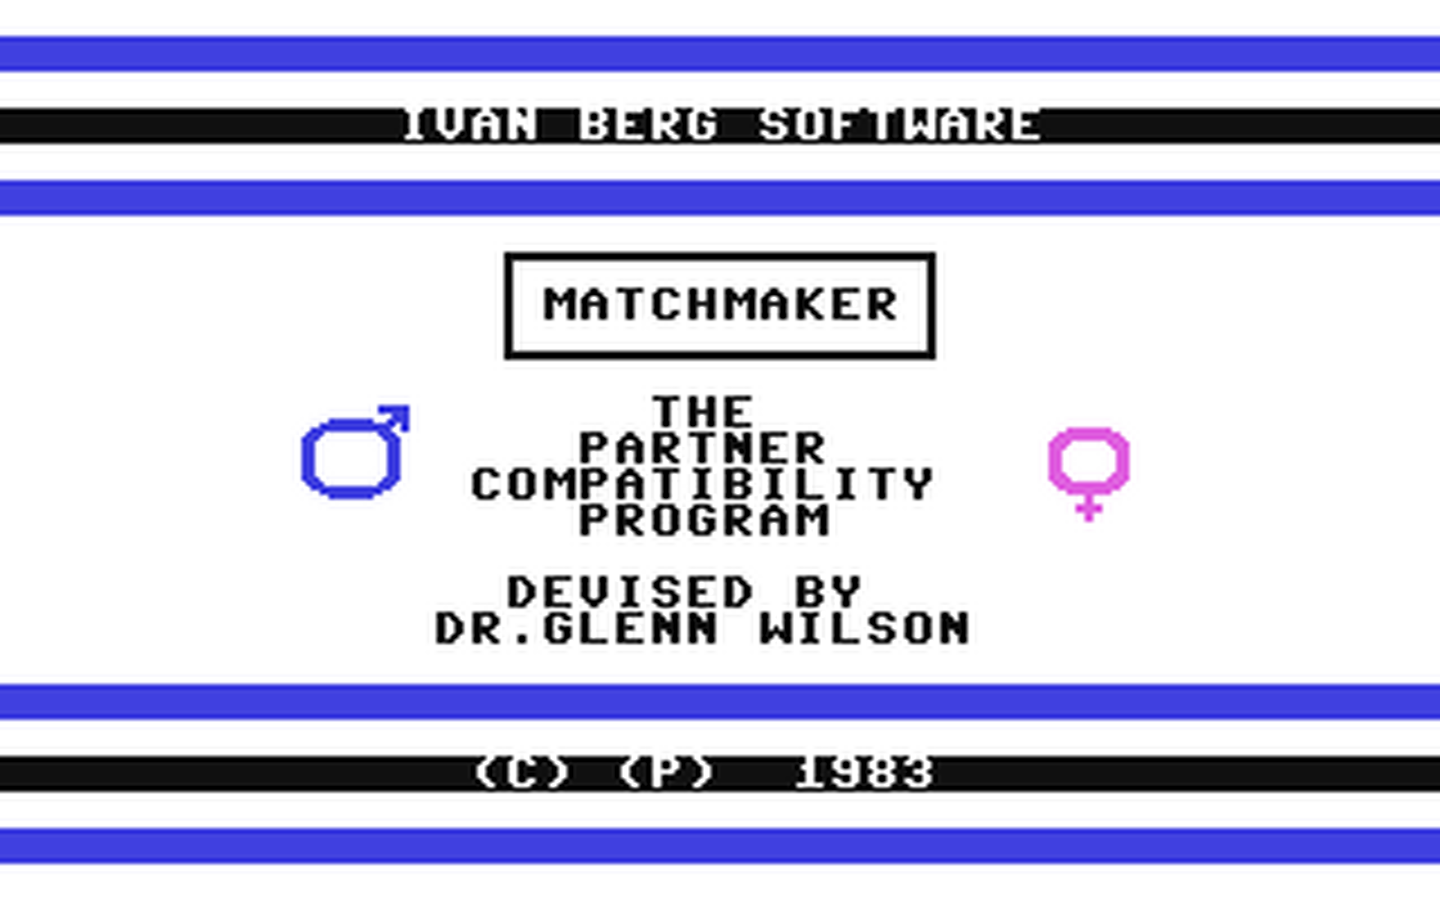 C64 GameBase Matchmaker Ivan_Berg_Software_Ltd. 1983